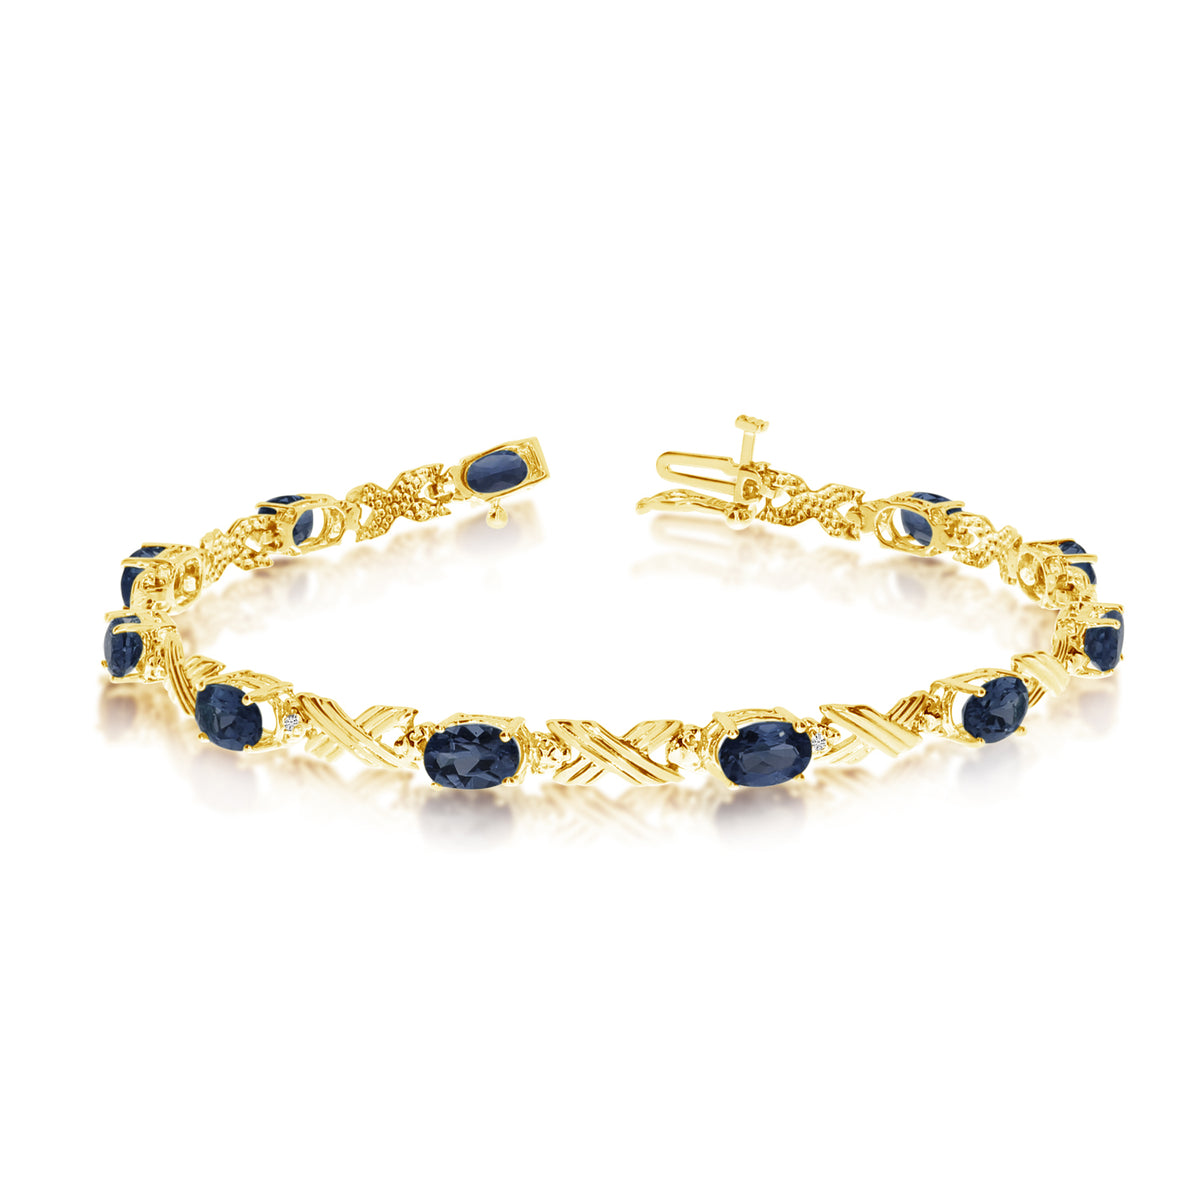 14K Yellow Gold Oval Sapphire Stones And Diamonds Tennis Bracelet, 7" fine designer jewelry for men and women